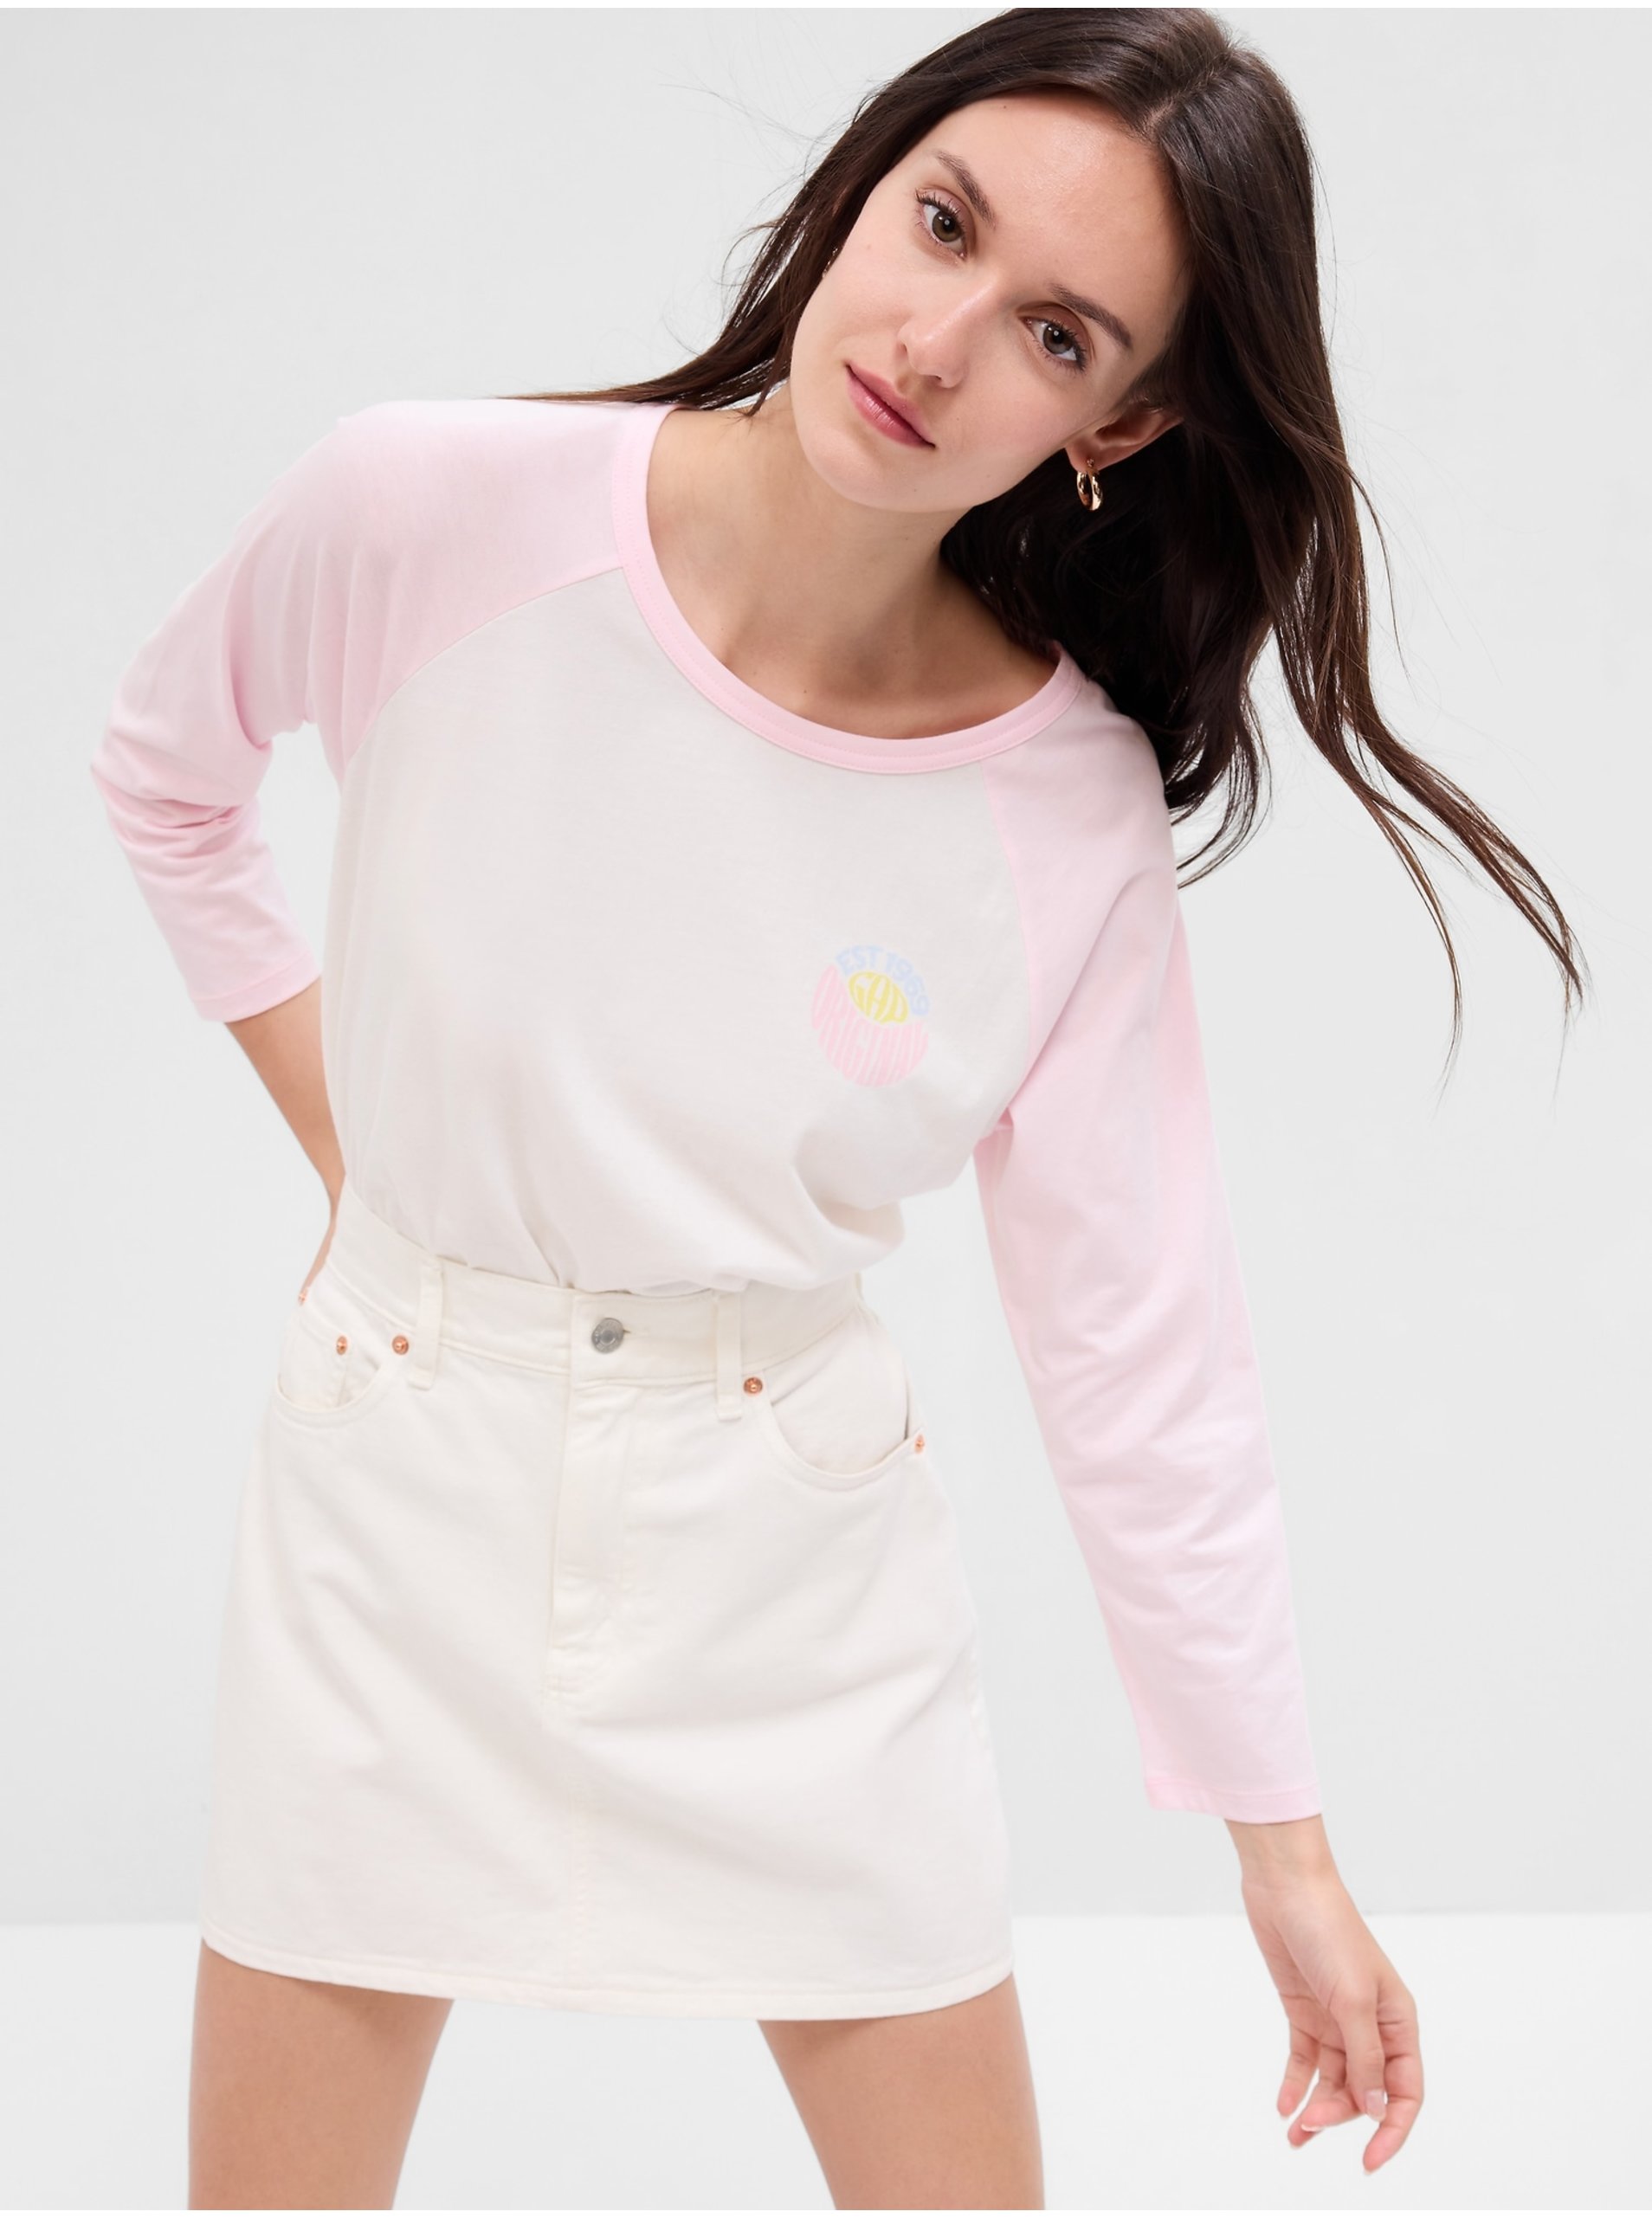 Lacno Ružovo-biele dámske tričko GAP